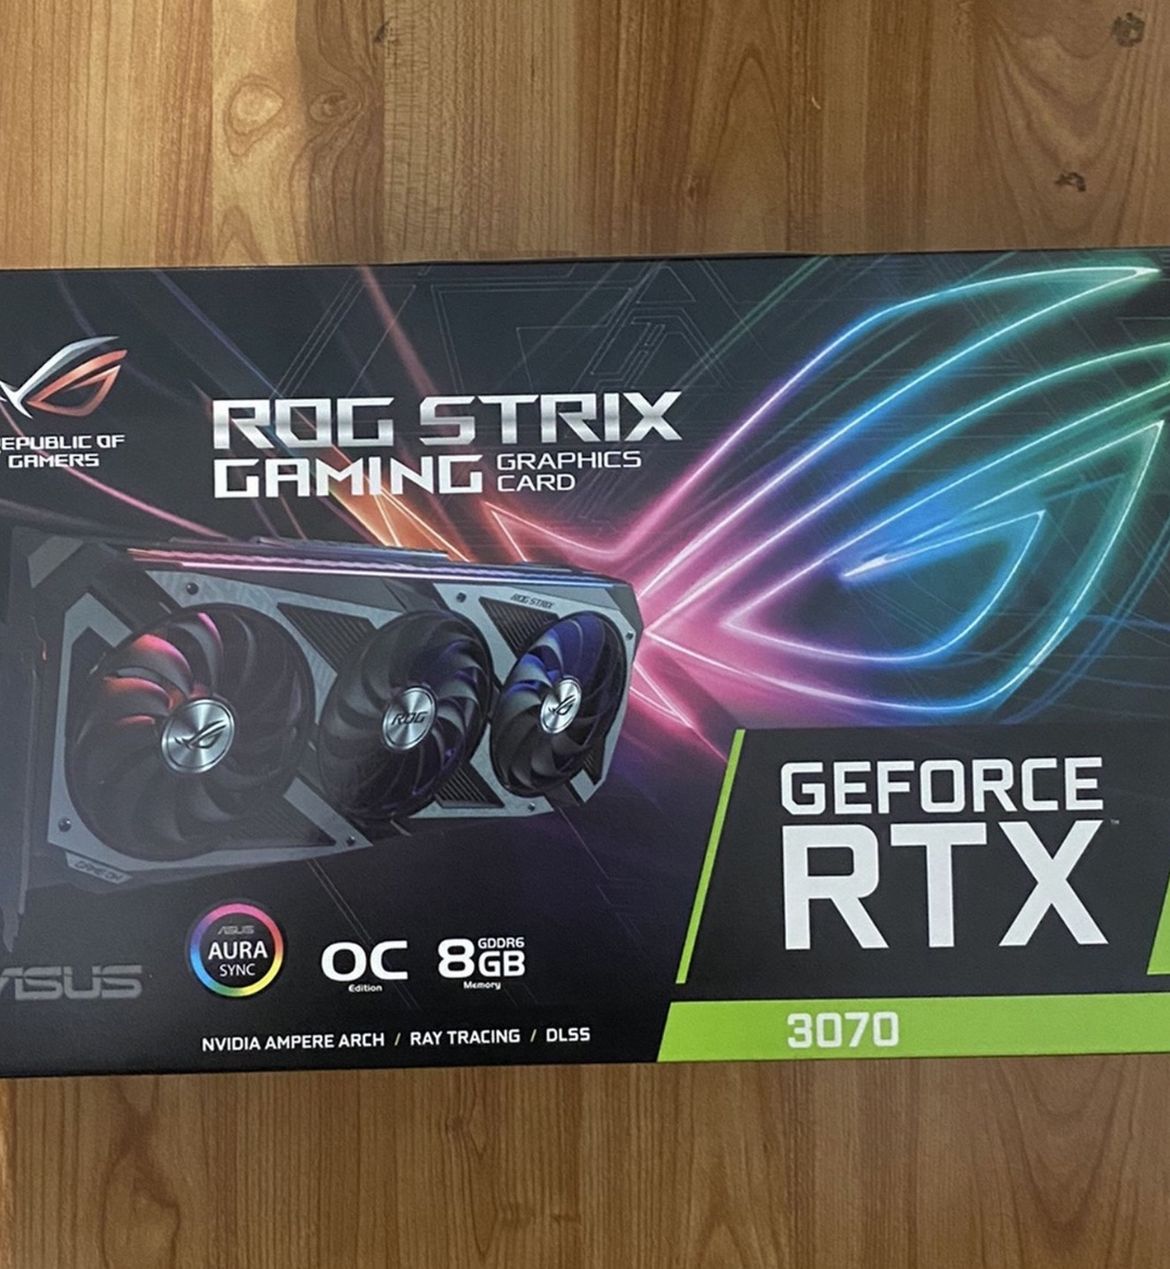 ASUS ROG Strix GeForce Rtx 3070 Ray Tracing GPU